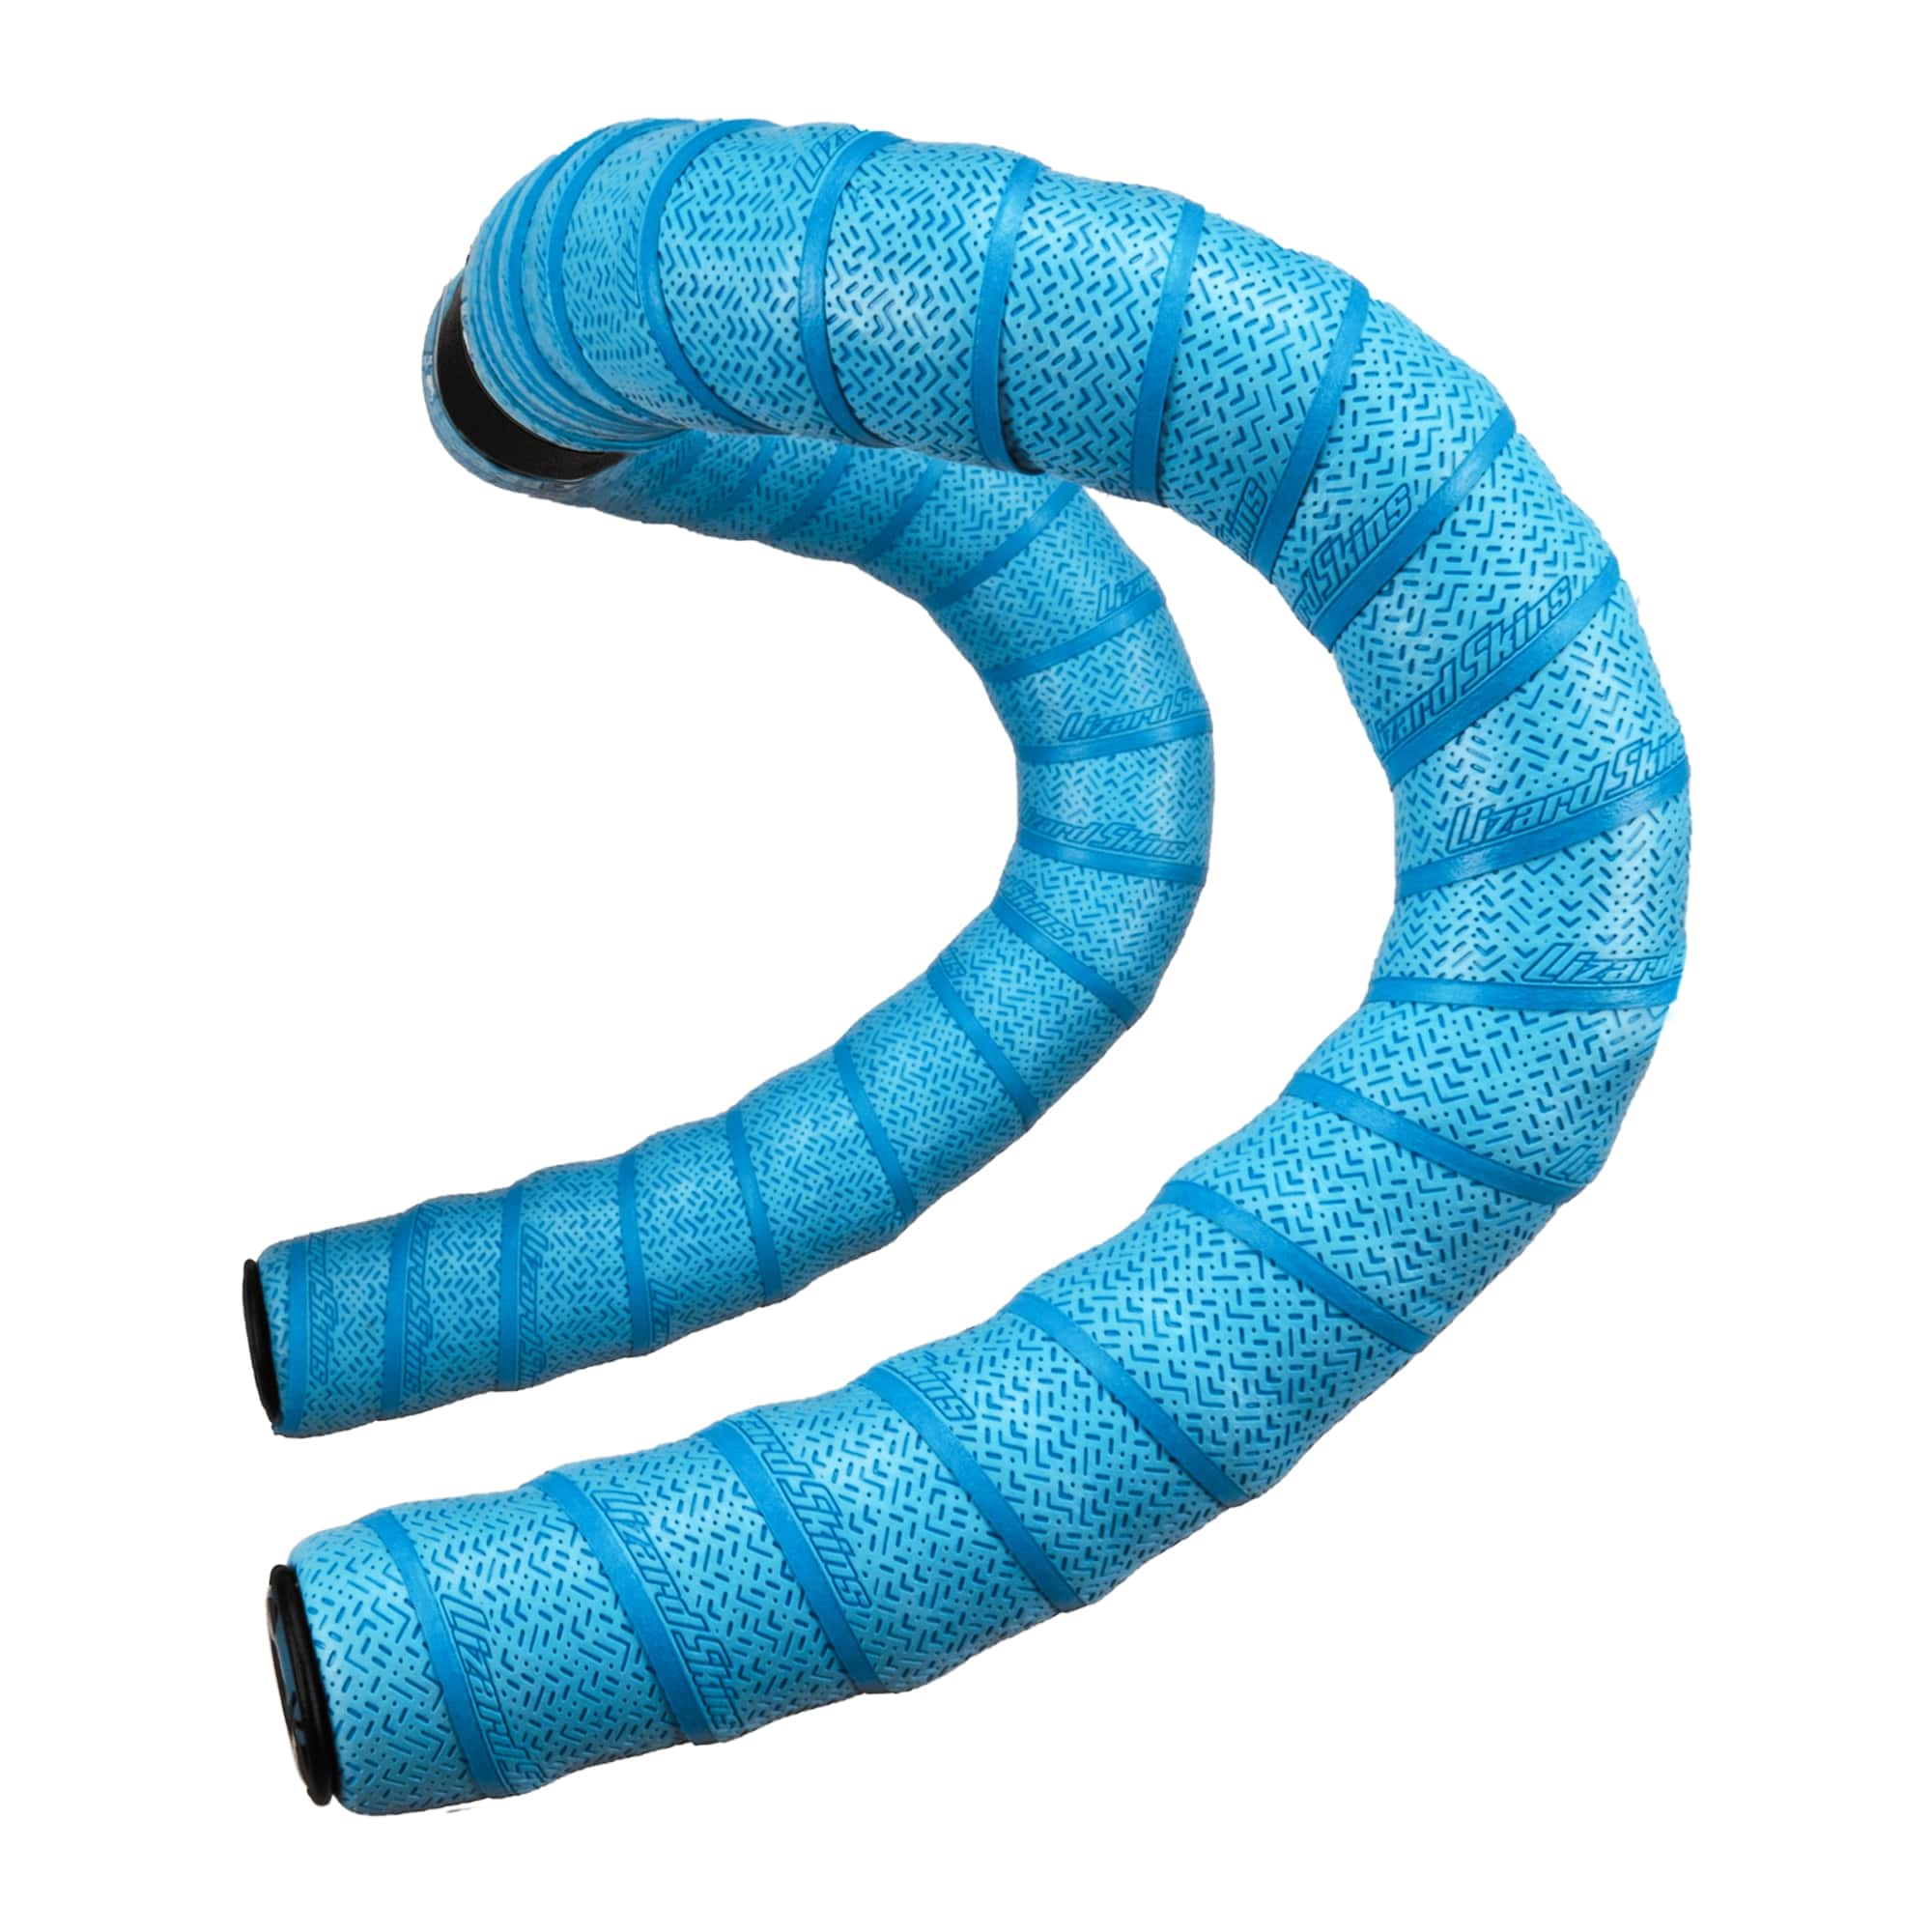 Обмотка руля Lizard Skins DSP V2, толщина 2,5мм, длина 2080мм, голубая (Sky Blue)